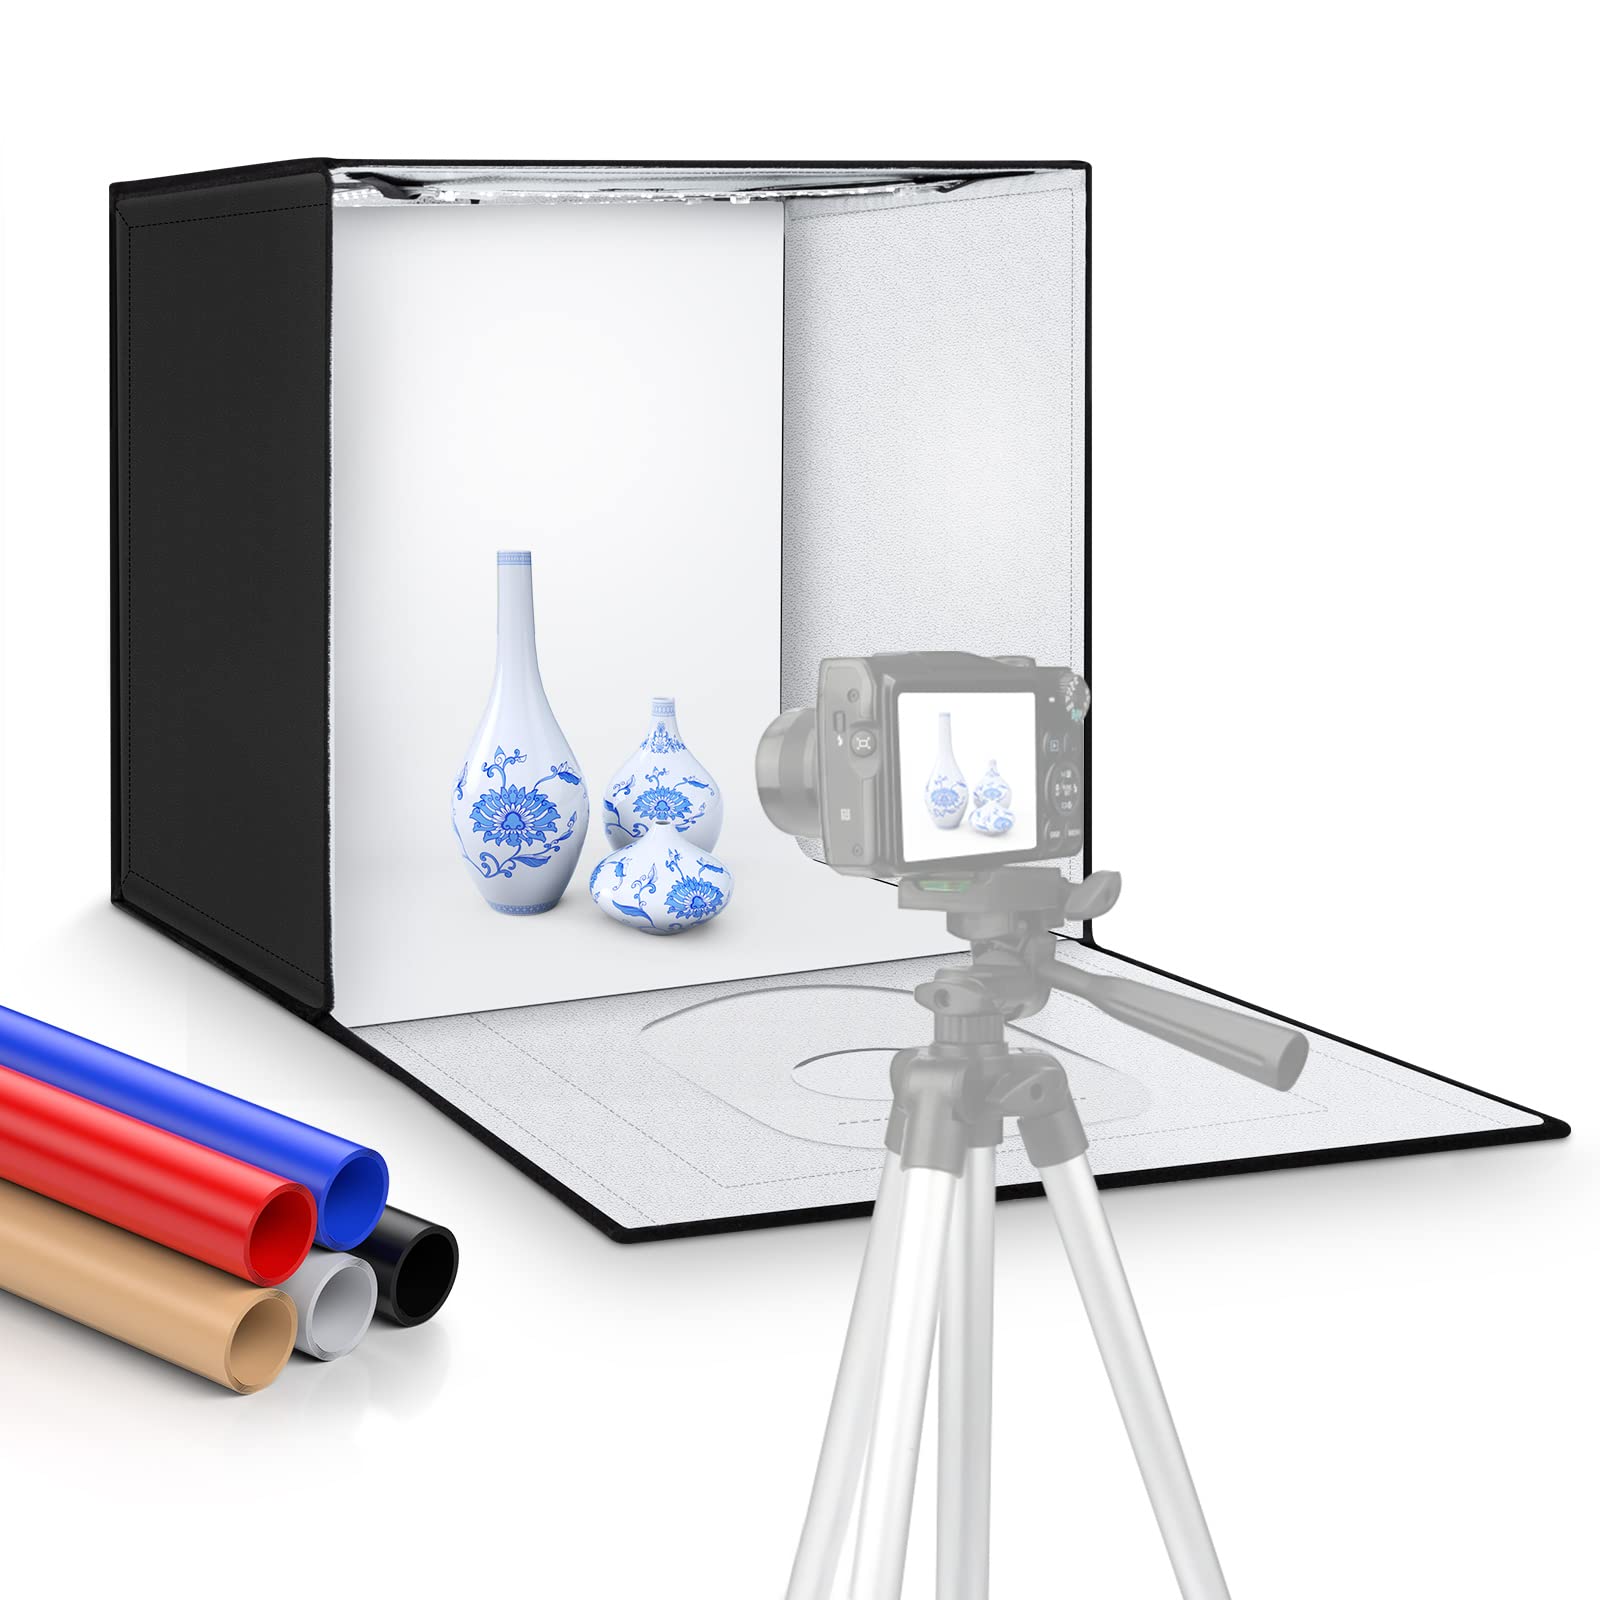 OMBAR Fotostudio, 60x60x60cm dimmbare Faltbare Lichtzelt professionelle Fotobox Kit 240pcs LED Beleuchtung mit 5 Hintergründe